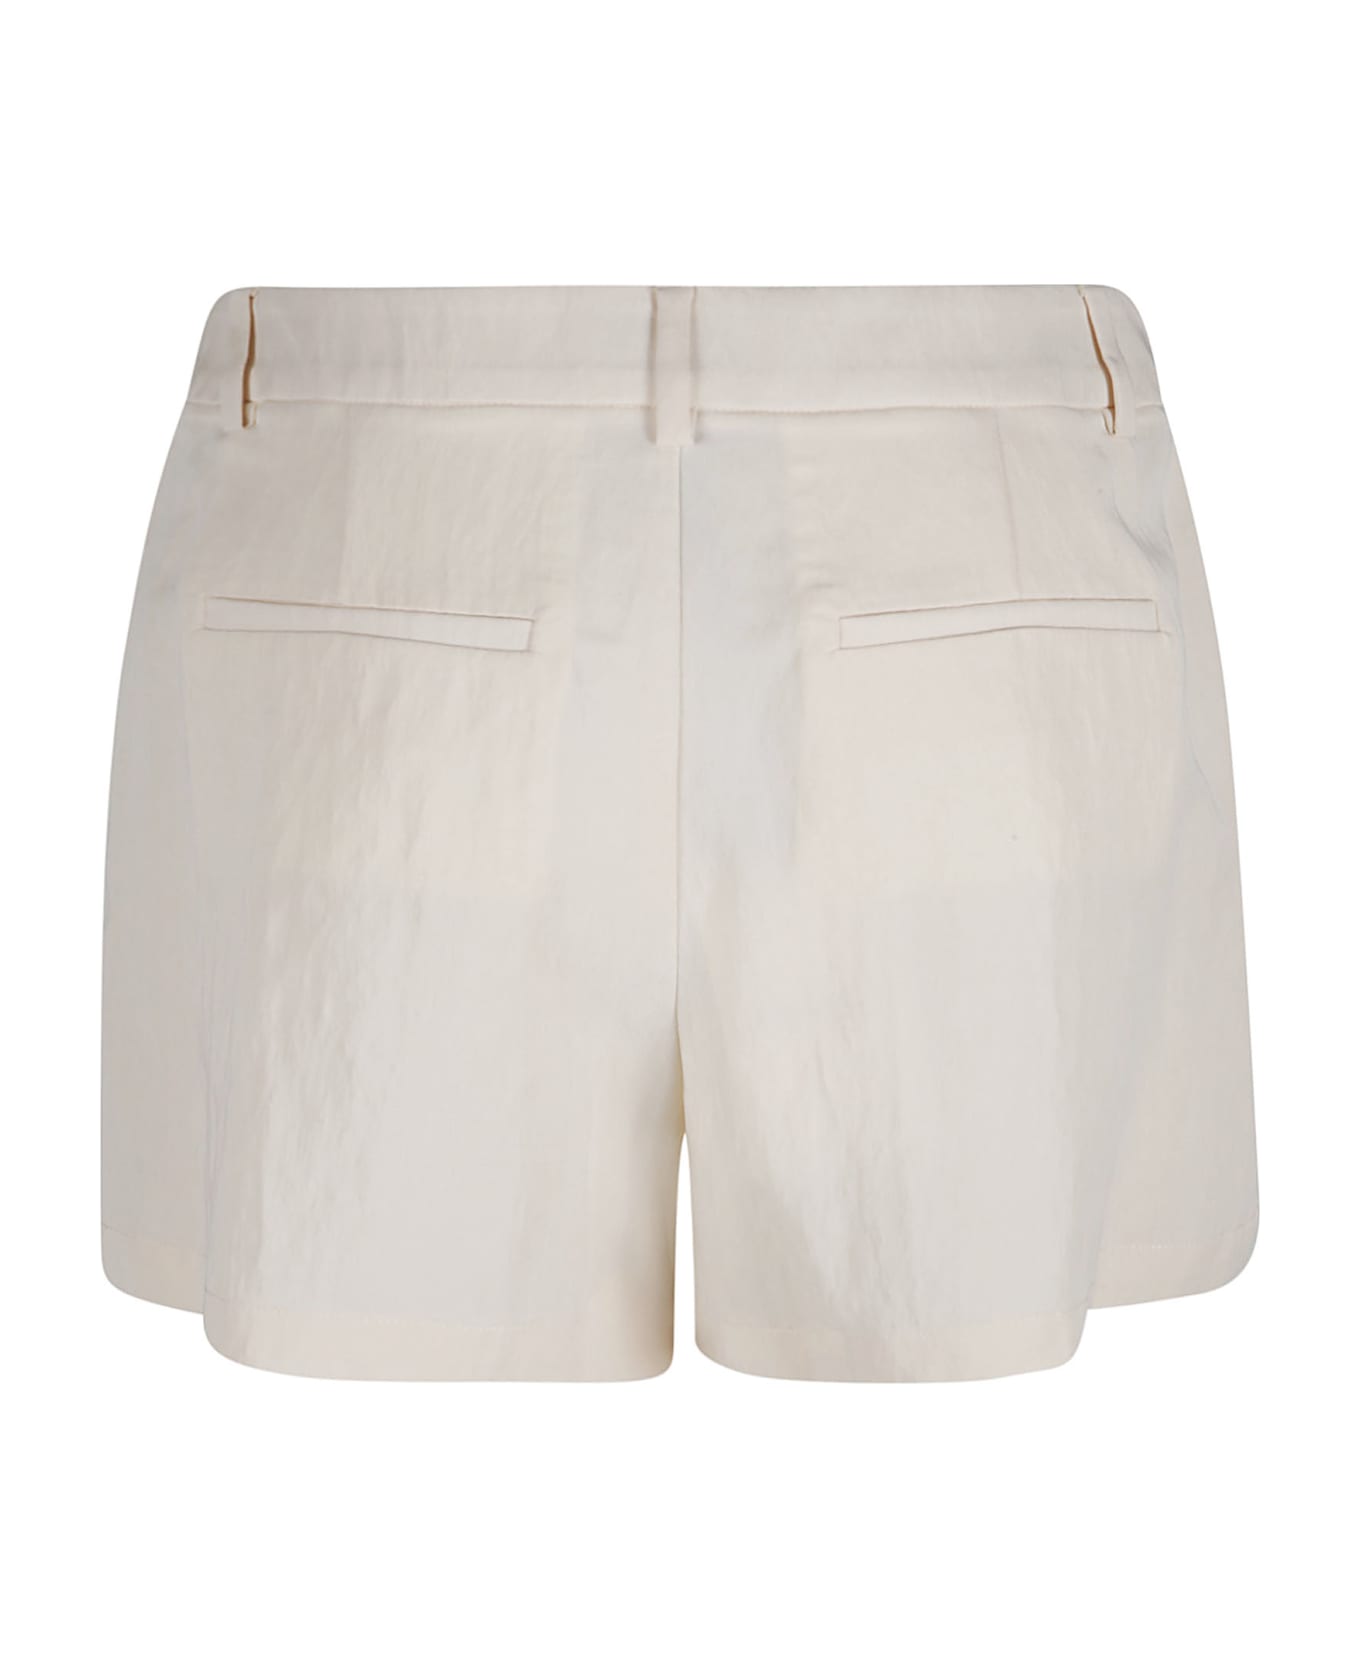 Blumarine Concealed Shorts - Cream